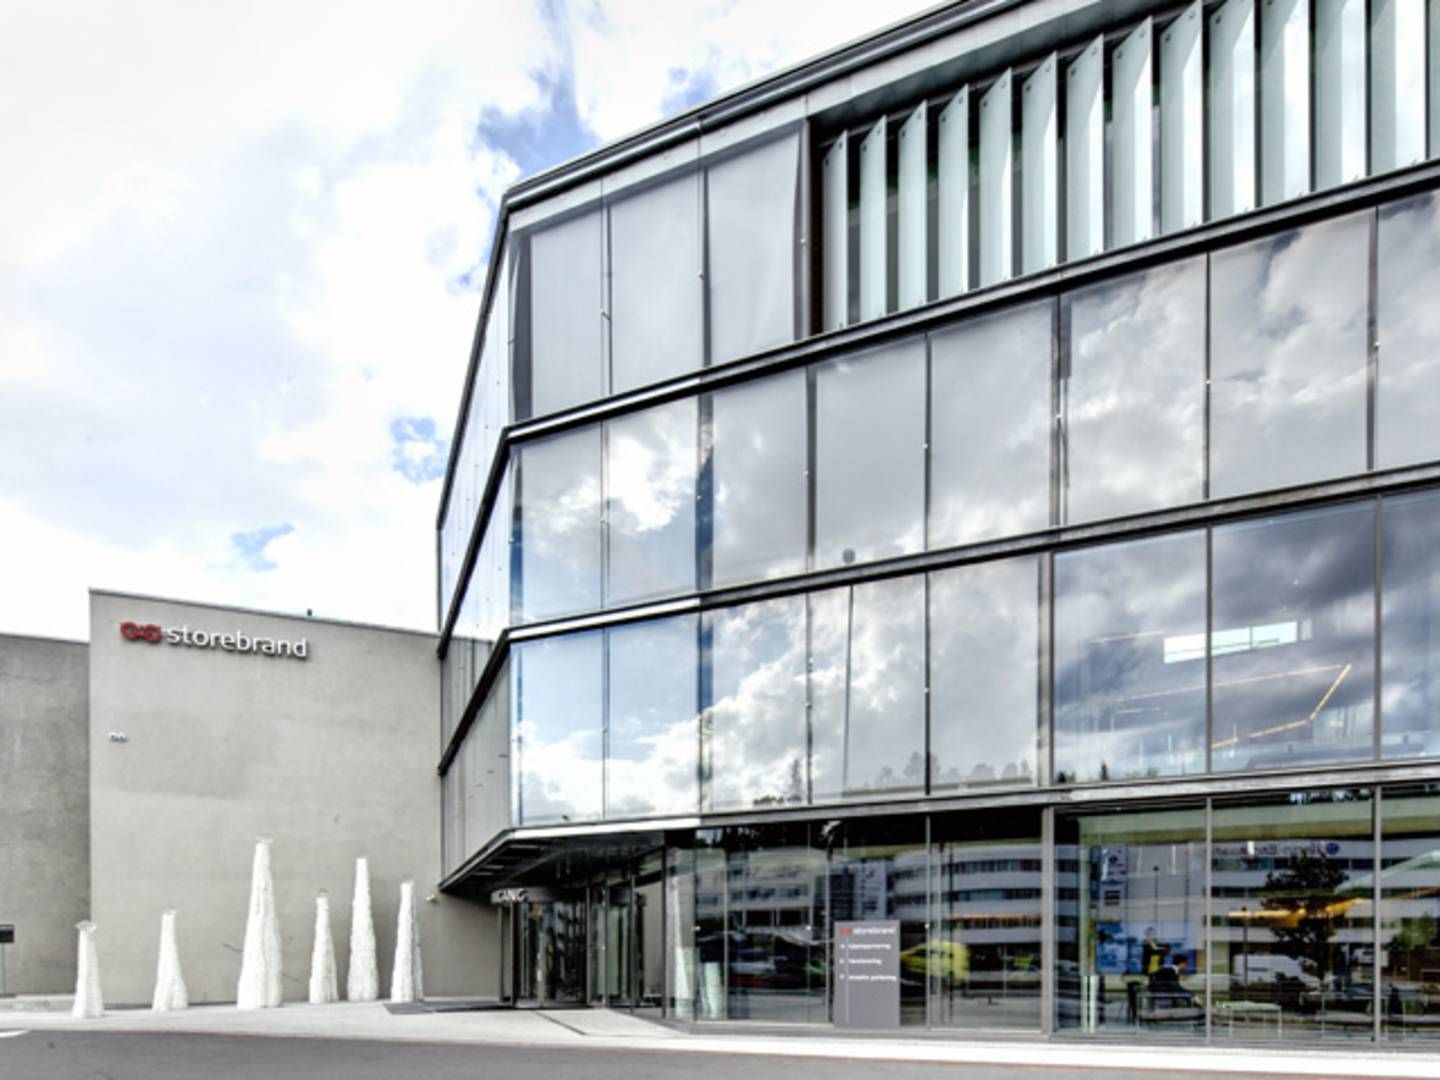 Storebrand's headquarters in Lysaker near Oslo. | Photo: PR/Storebrand